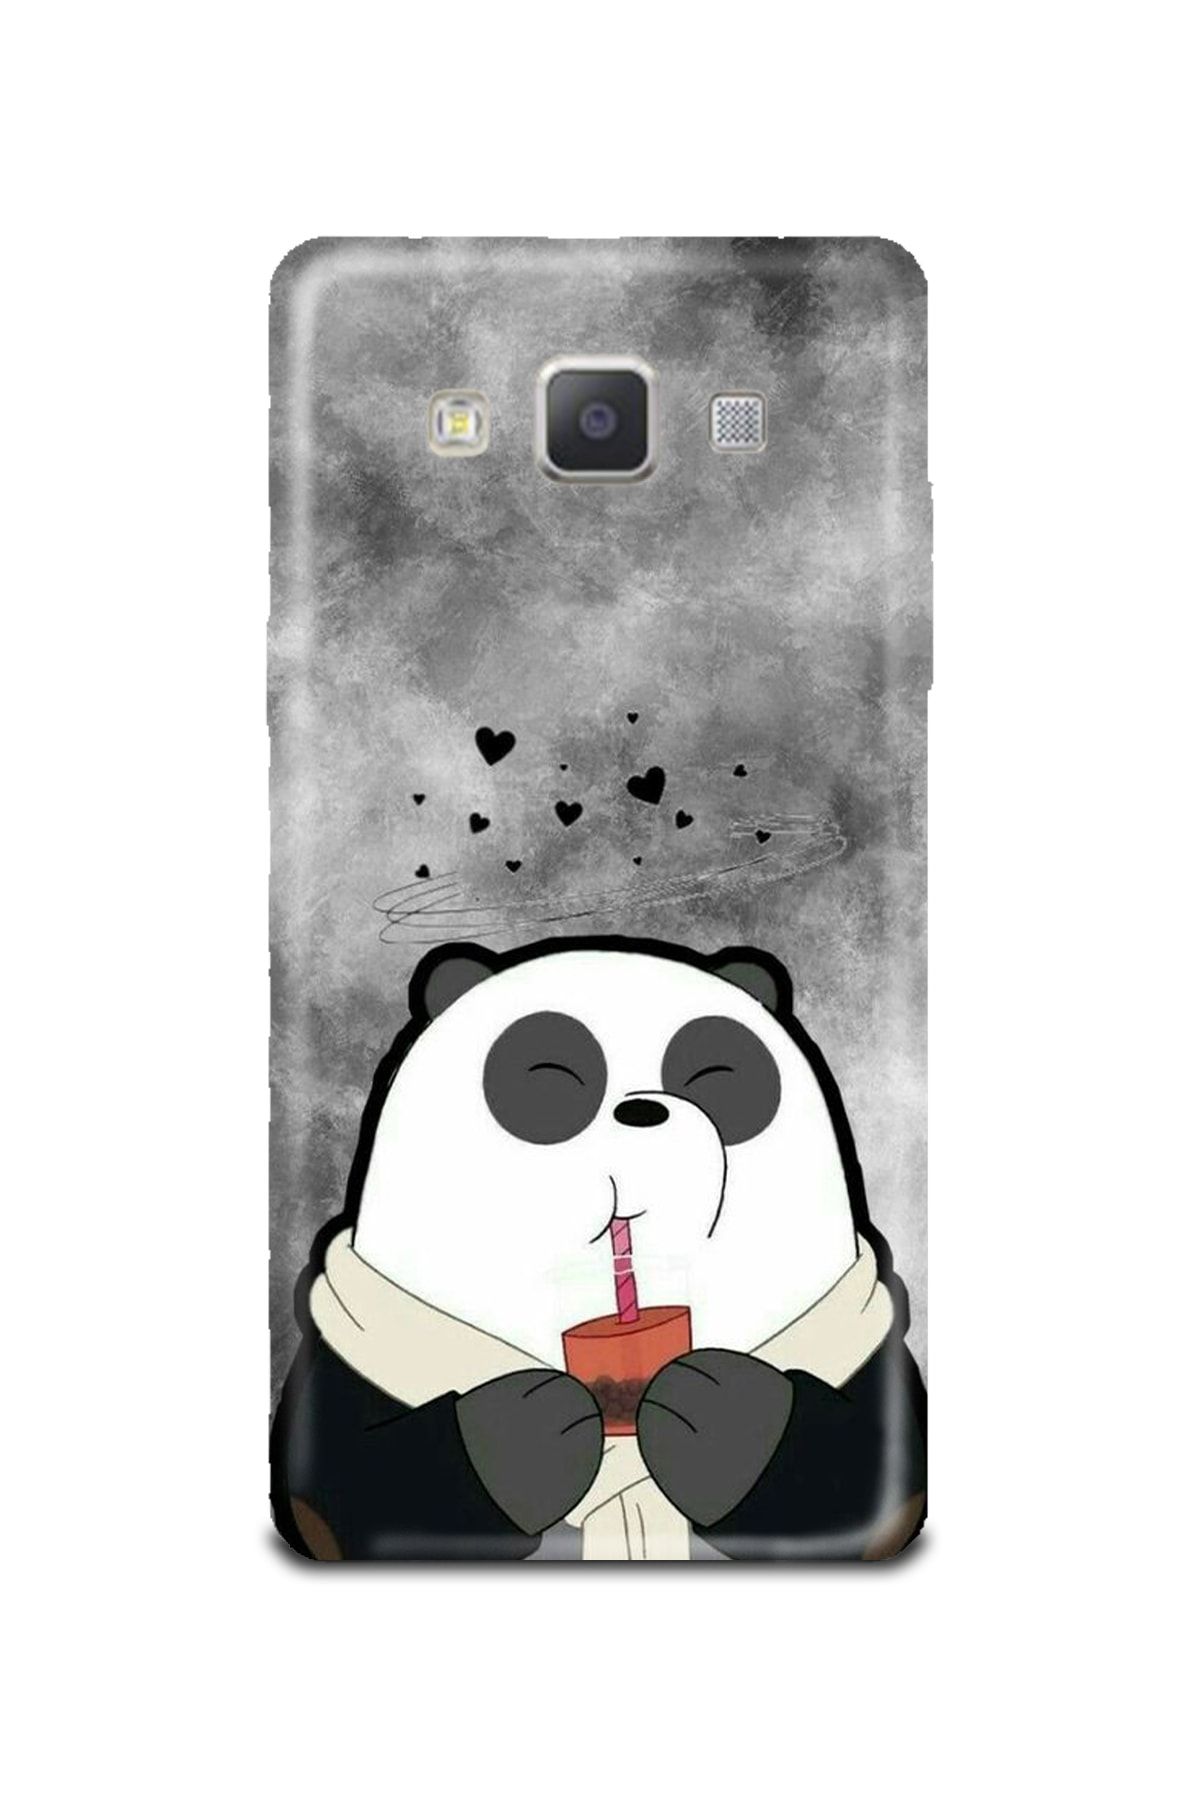 PERAX Samsung Galaxy J5 2015 Panda Desenli Telefon Kılıfı Samj52015-00001001-01